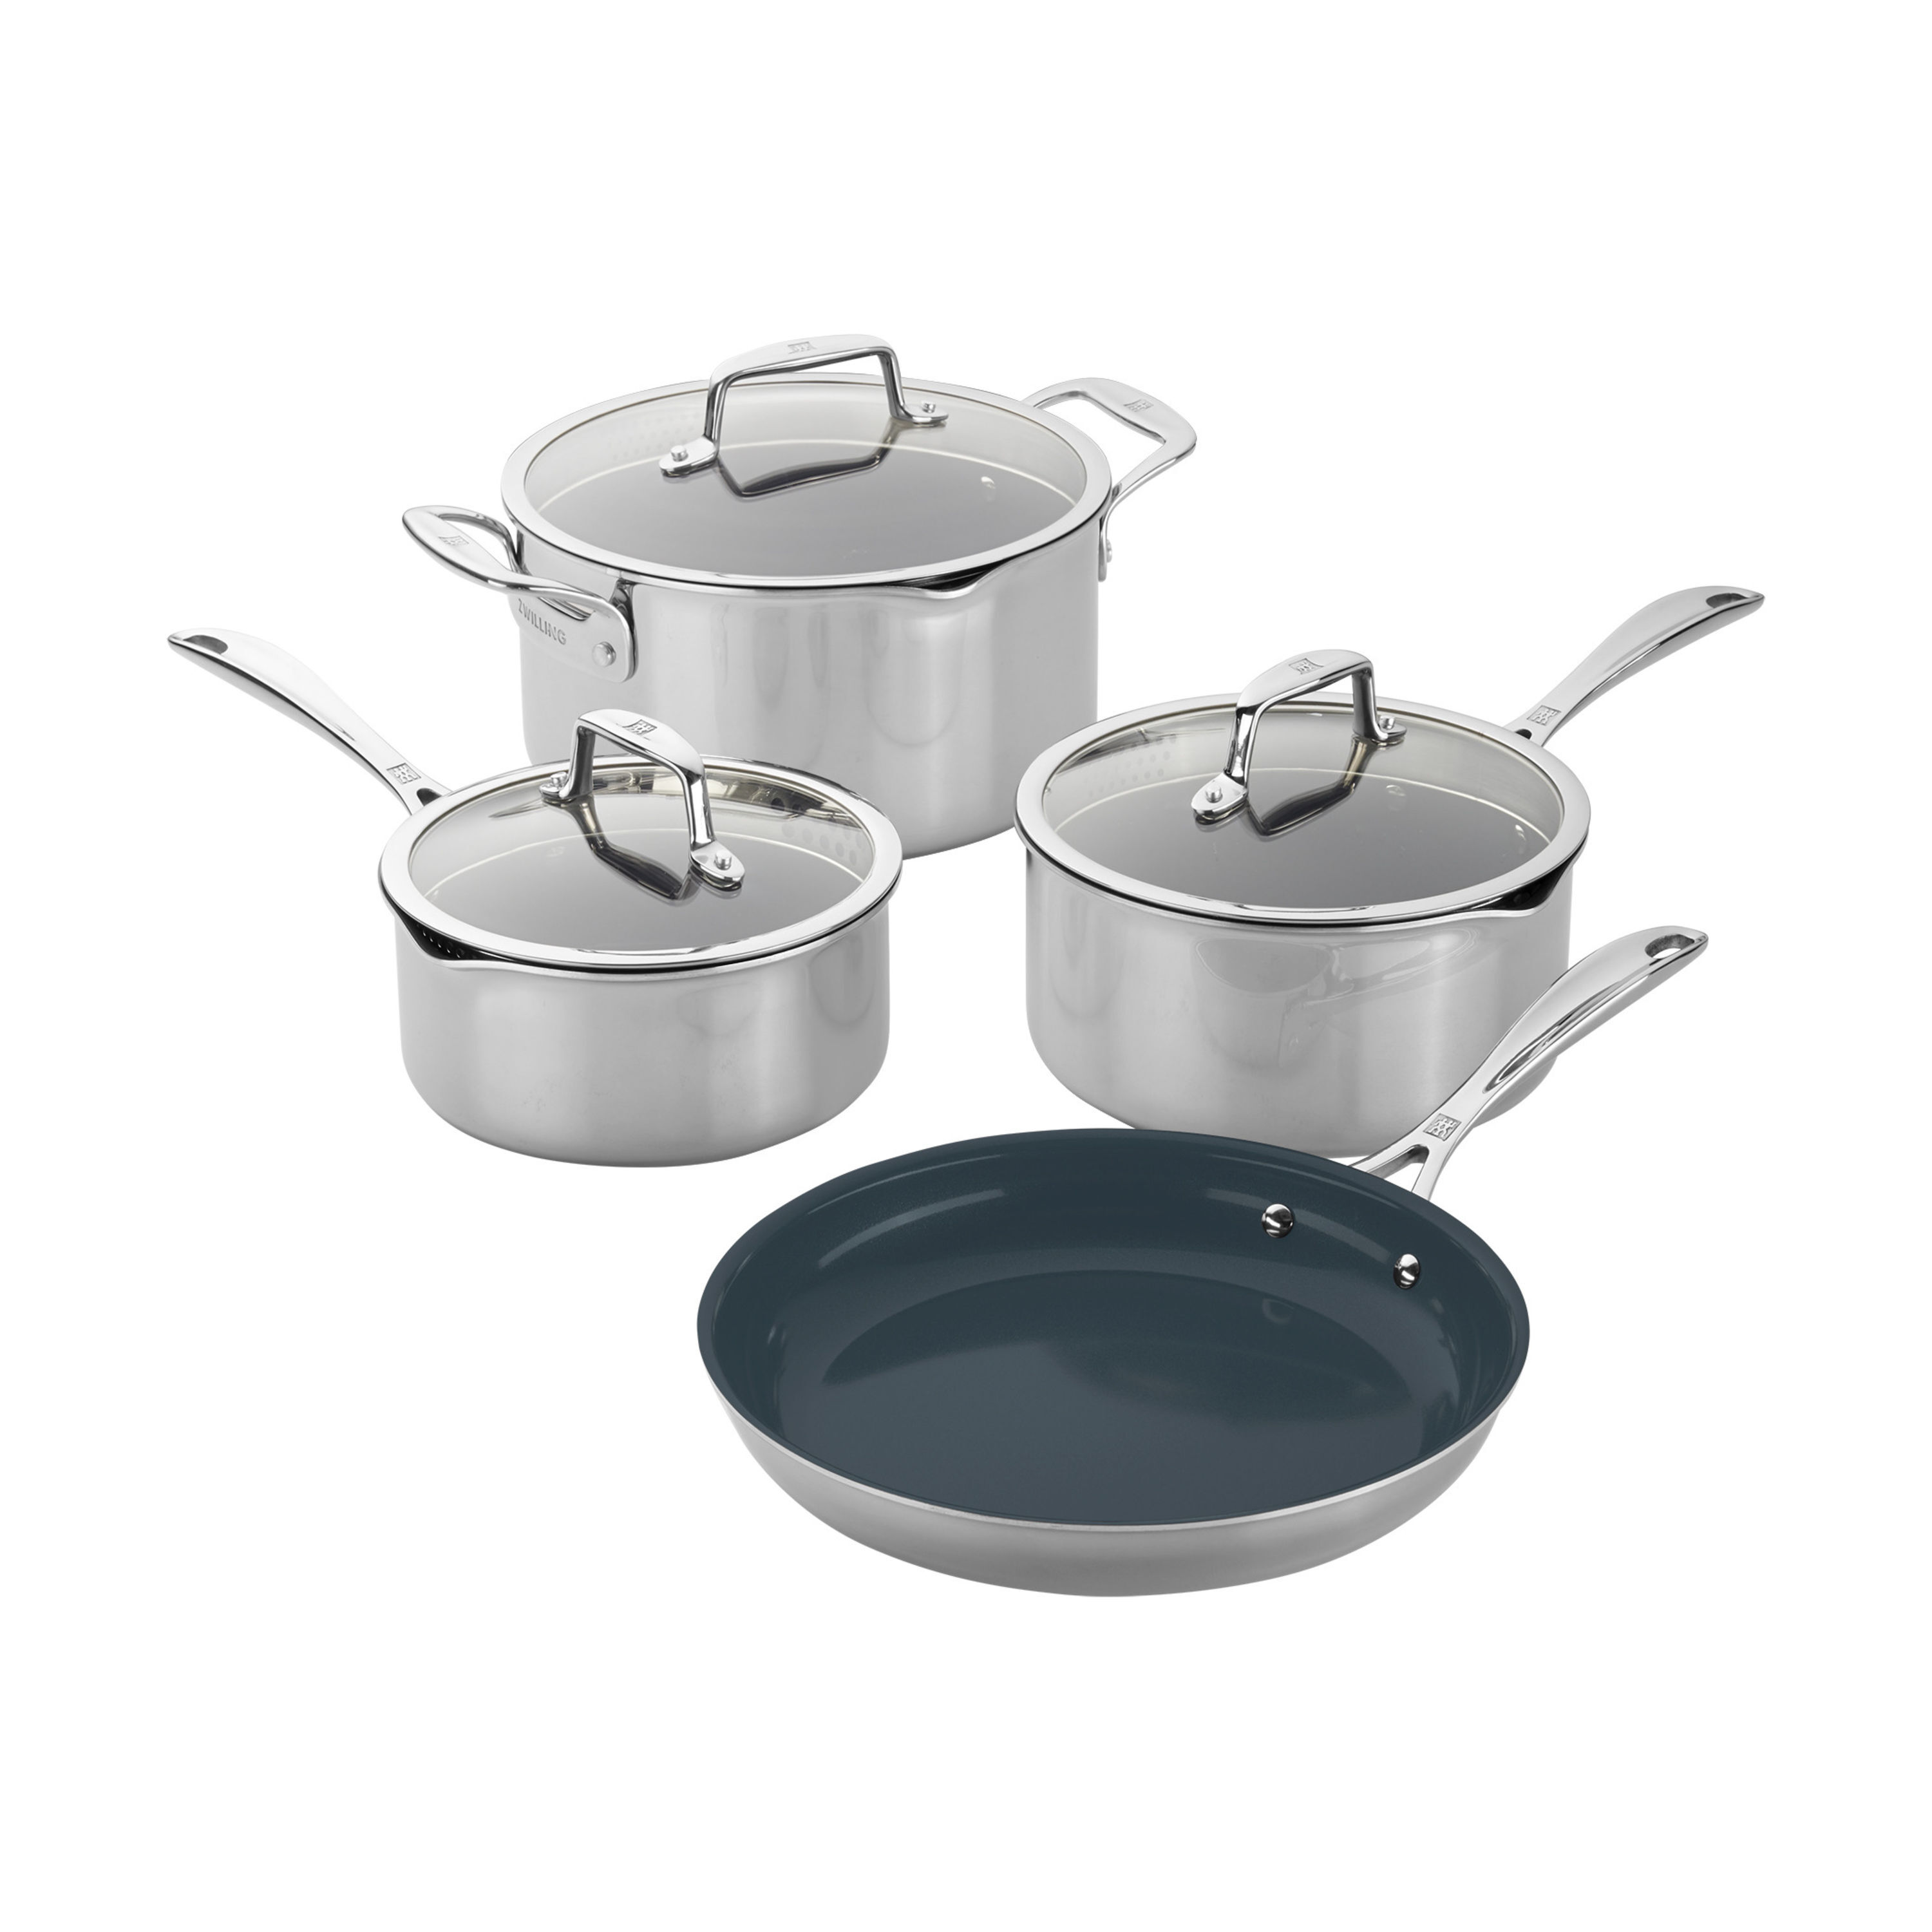 Details about   12-Piece Toxin-Free Ceramic Nonstick Kitchen Cookware Set Cooking Pans Pots